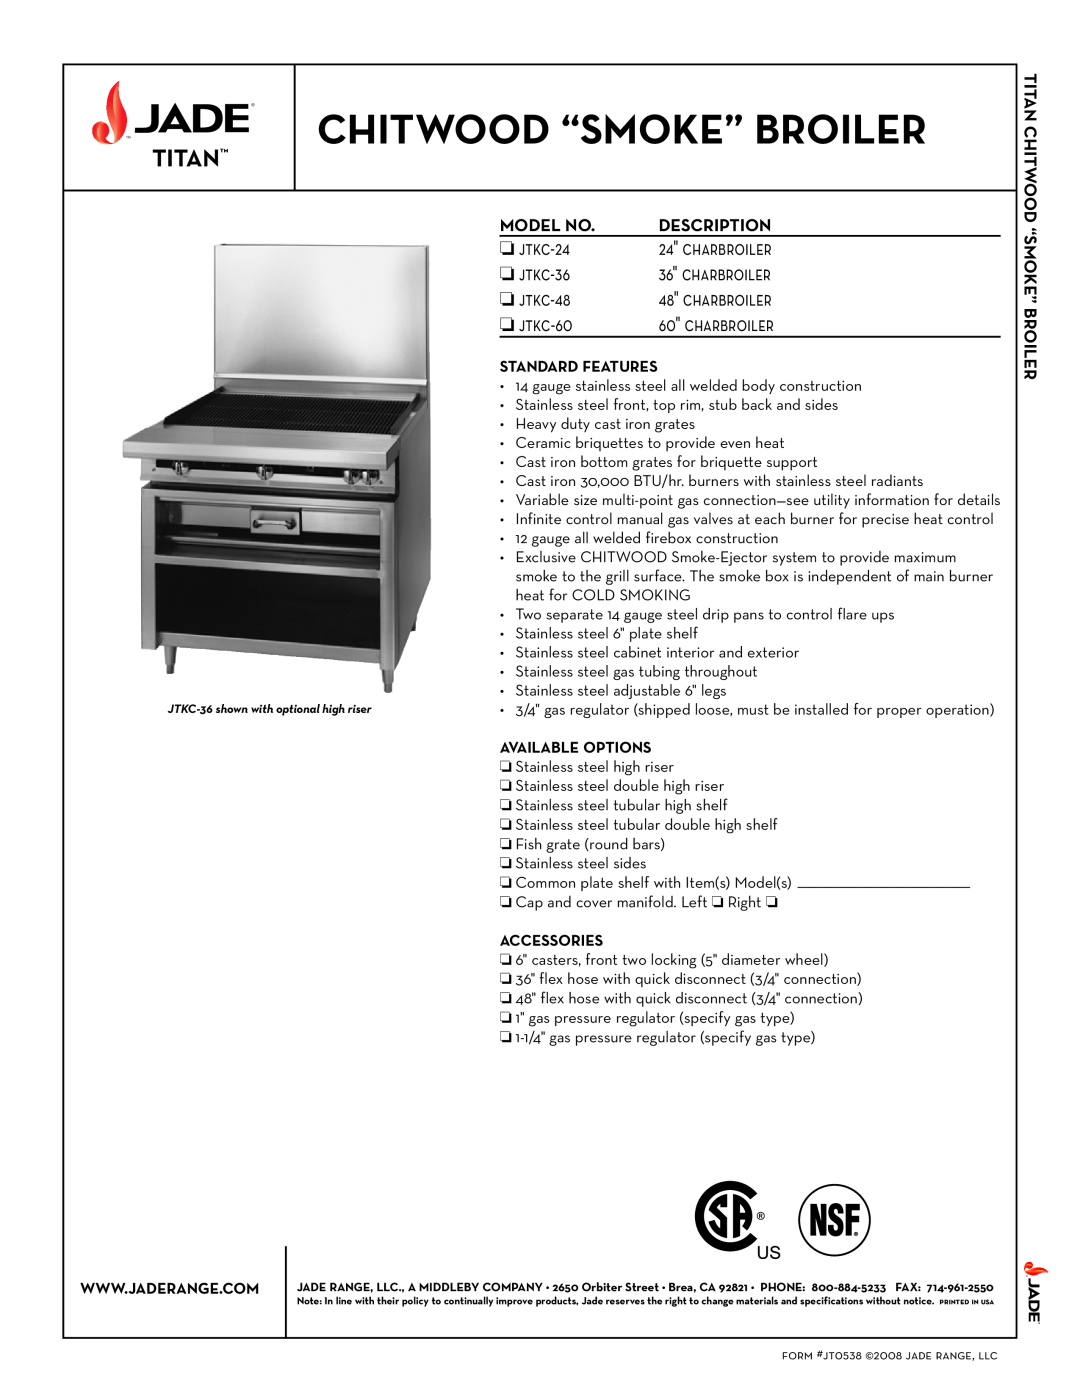 Jade Range JTKC-48 specifications Chitwood “Smoke” Broiler, Titan, jtkc-24, charbroiler, jtkc-36, jtkc-48, jtkc-60 